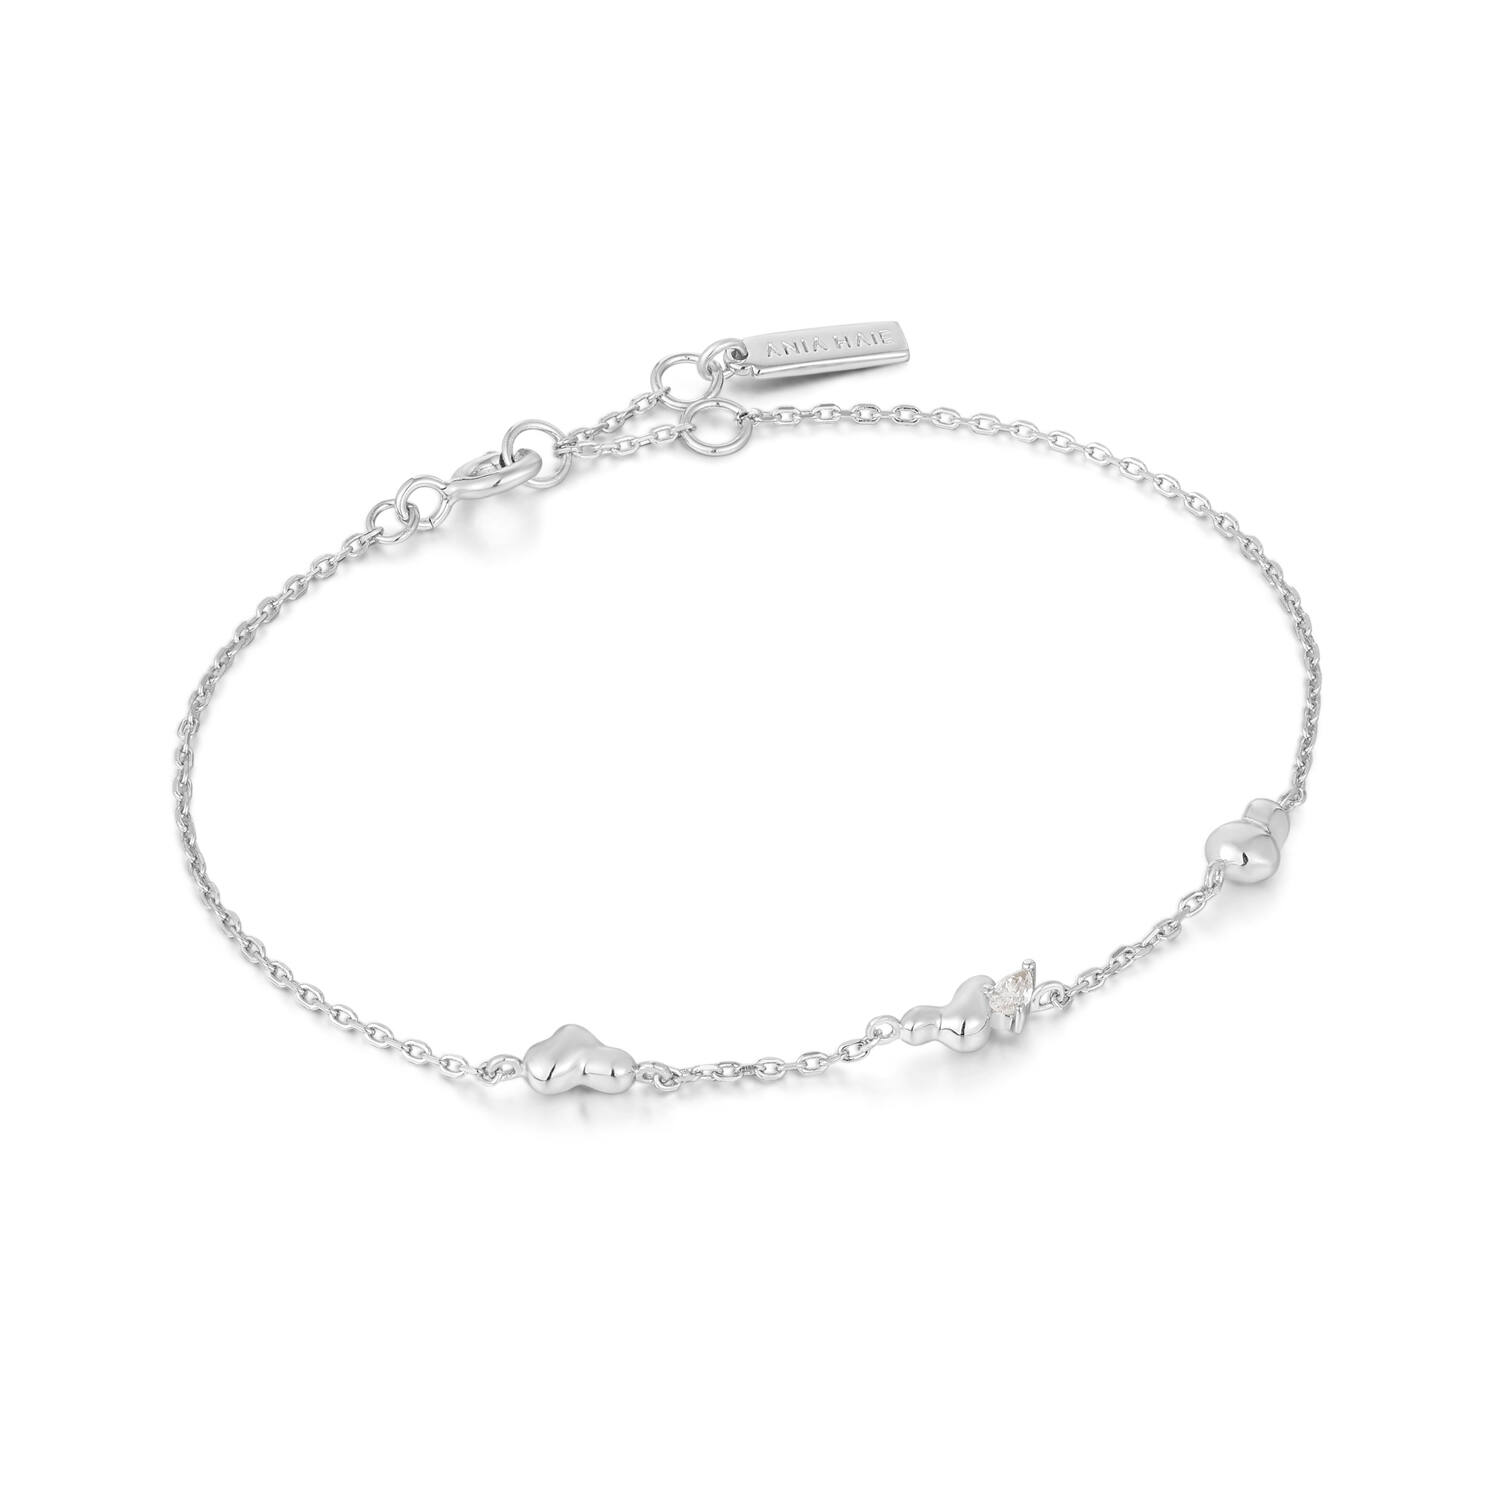 Silver Twisted - Bracelet - 16,5 - 18,5cm